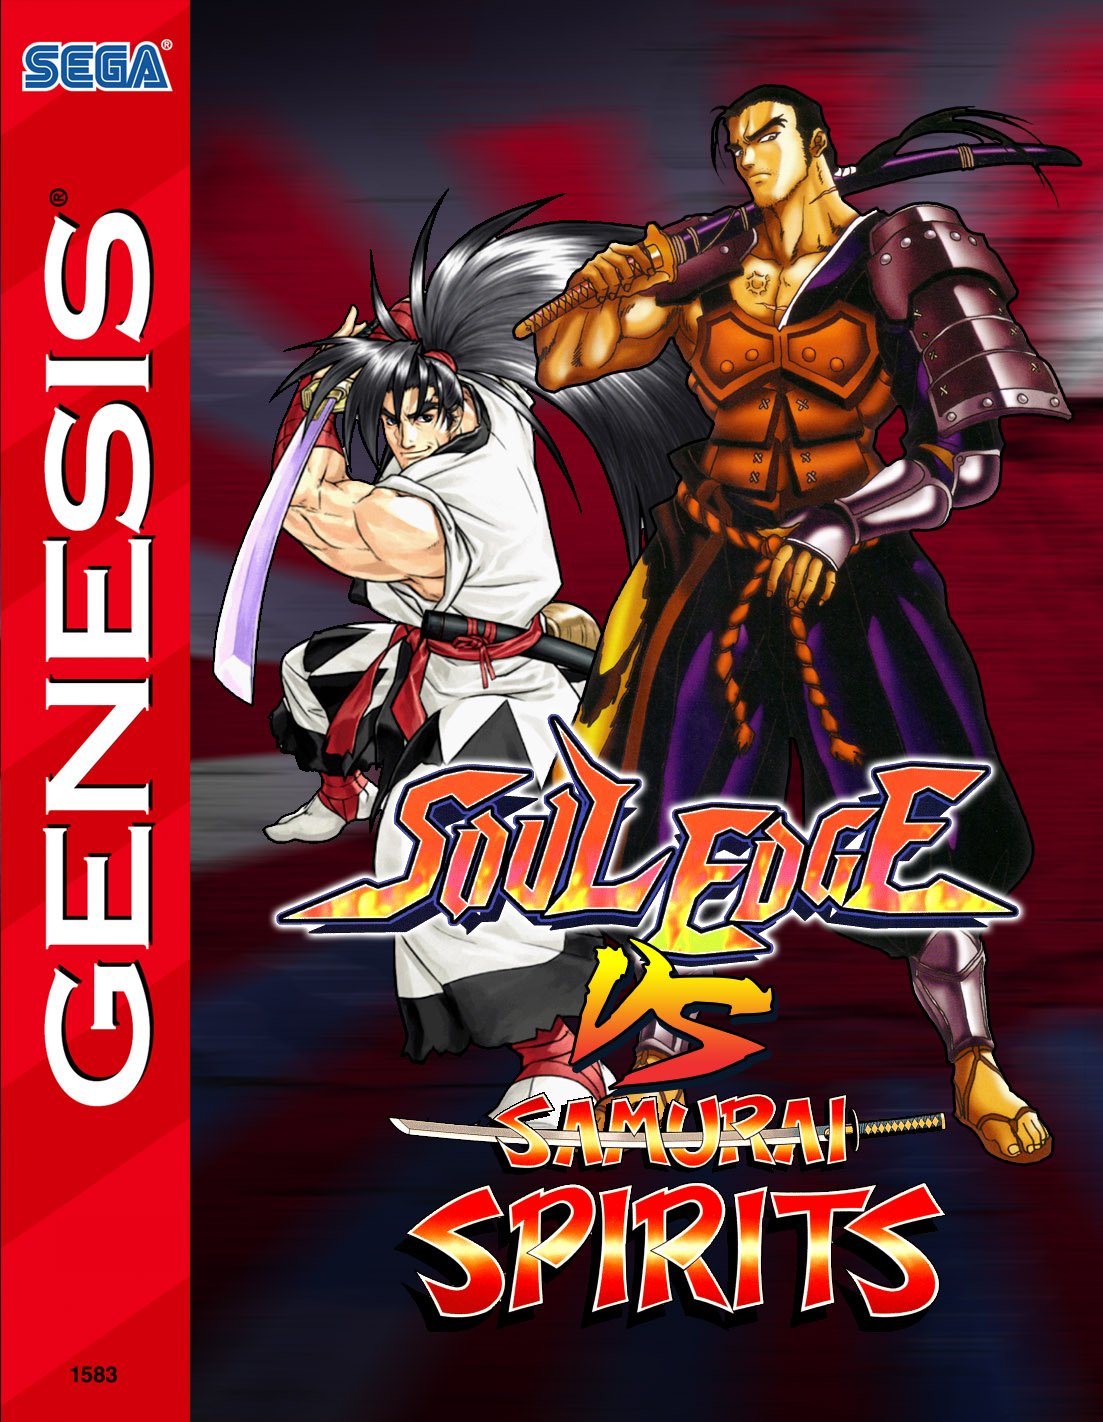 Image of Soul Edge Vs. Samurai Spirits